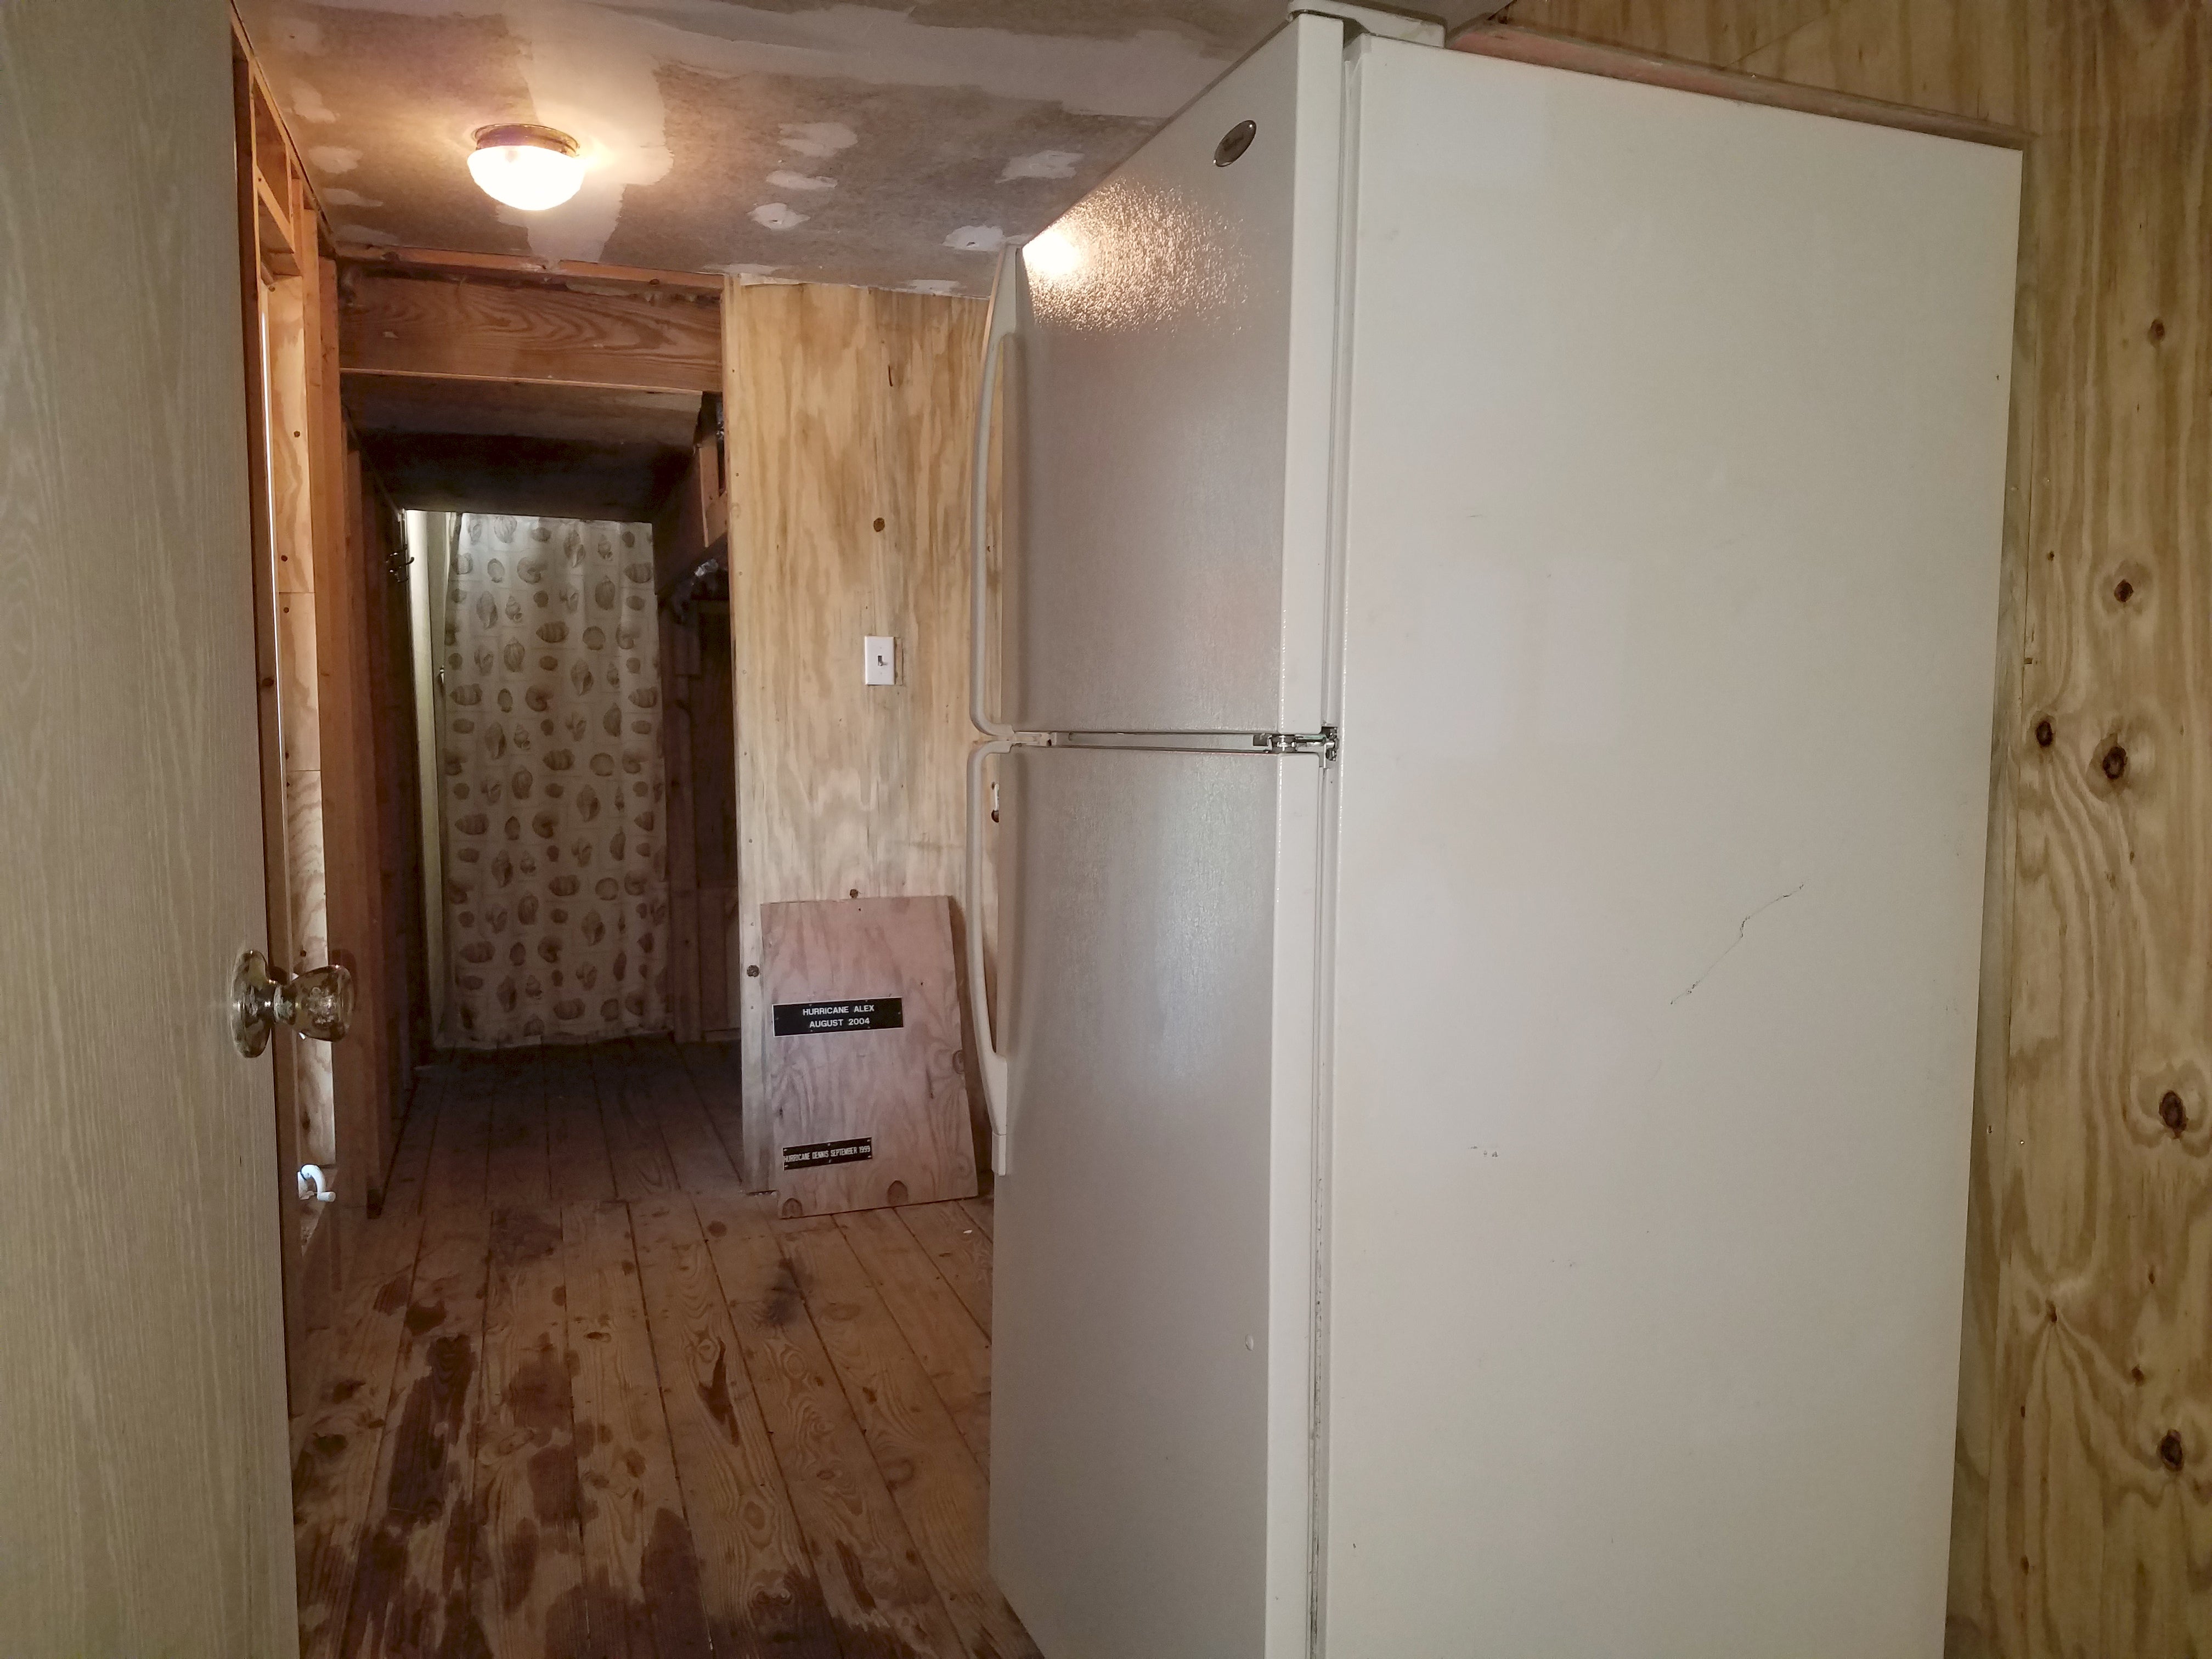 Additional Refrigerator, Ground Level